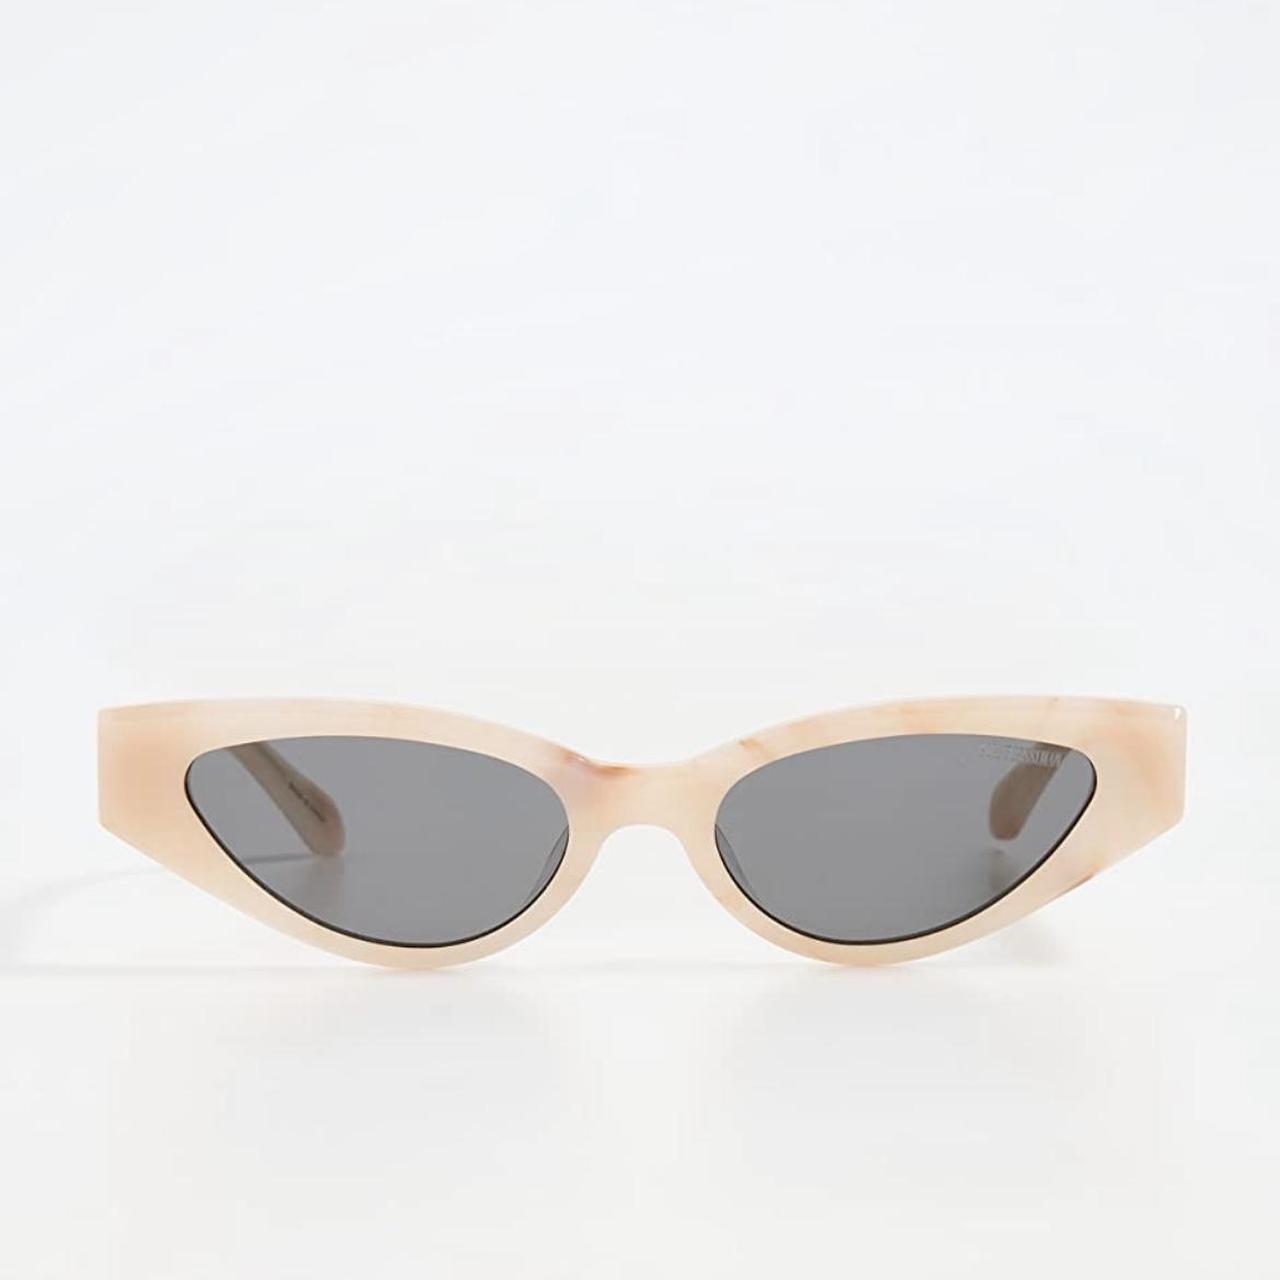 Poppy Lissiman Linda Sunglasses Brand new, never worn - Depop